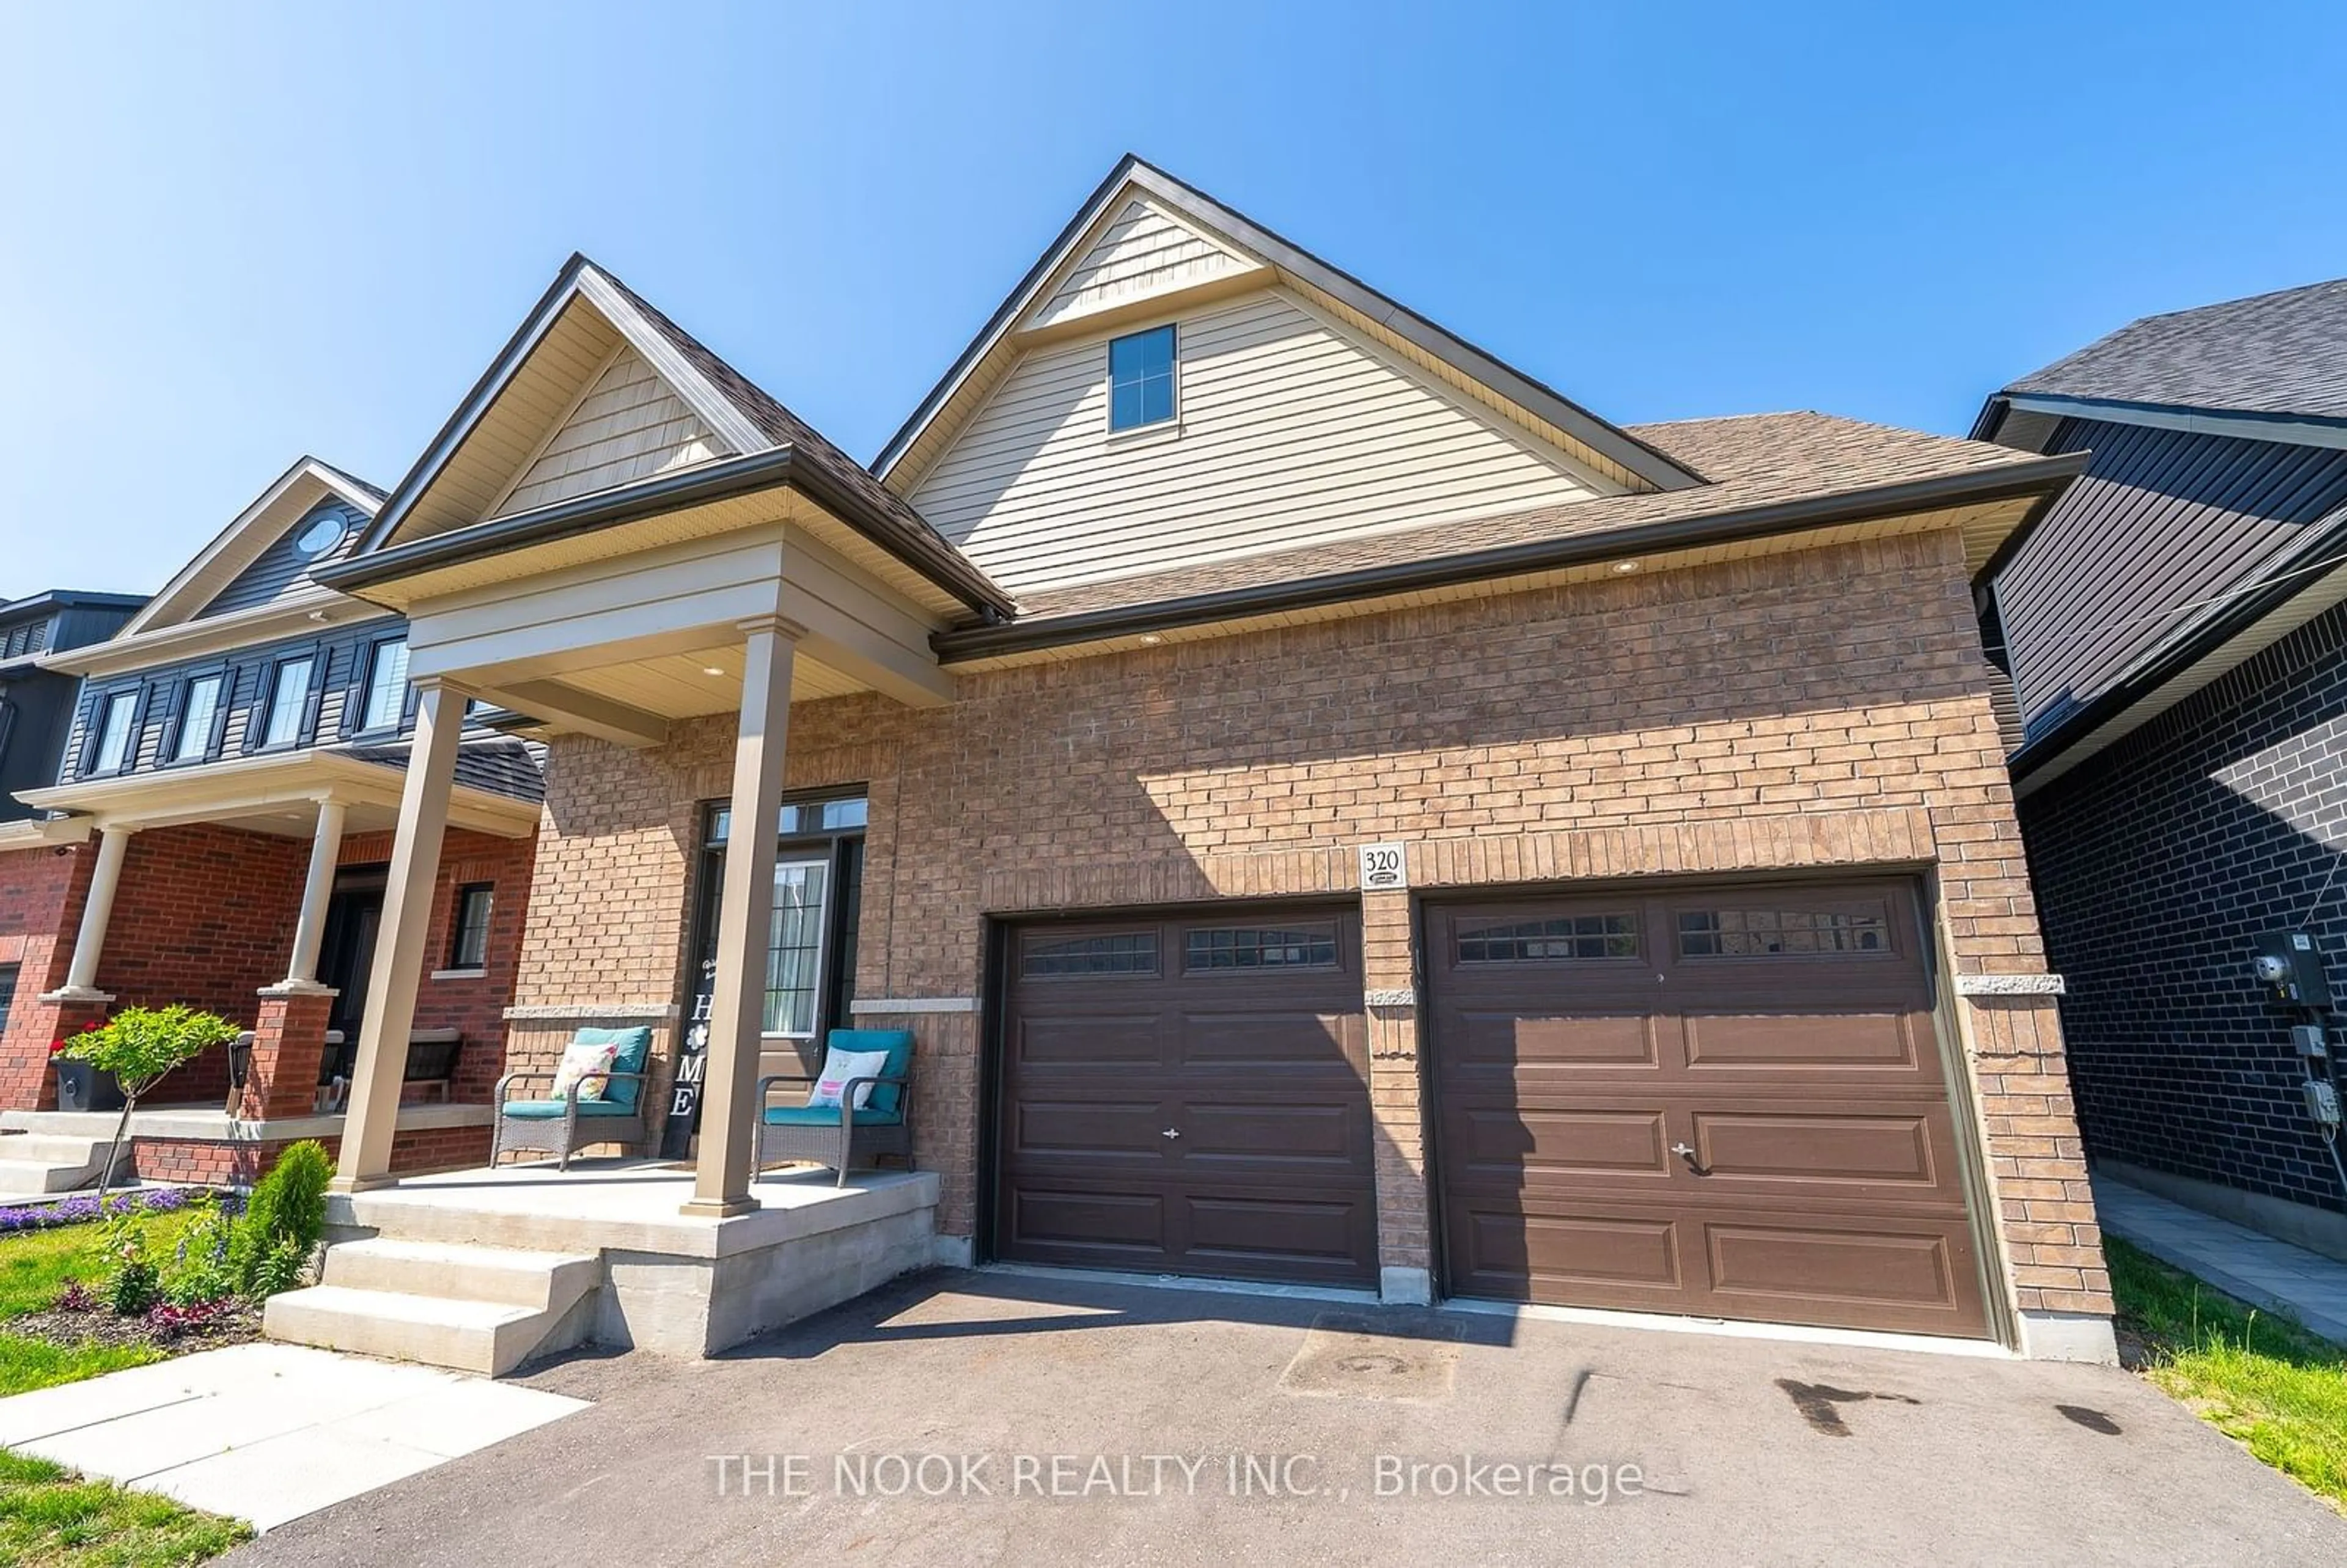 Home with brick exterior material for 320 Northglen Blvd, Clarington Ontario L1C 7G5